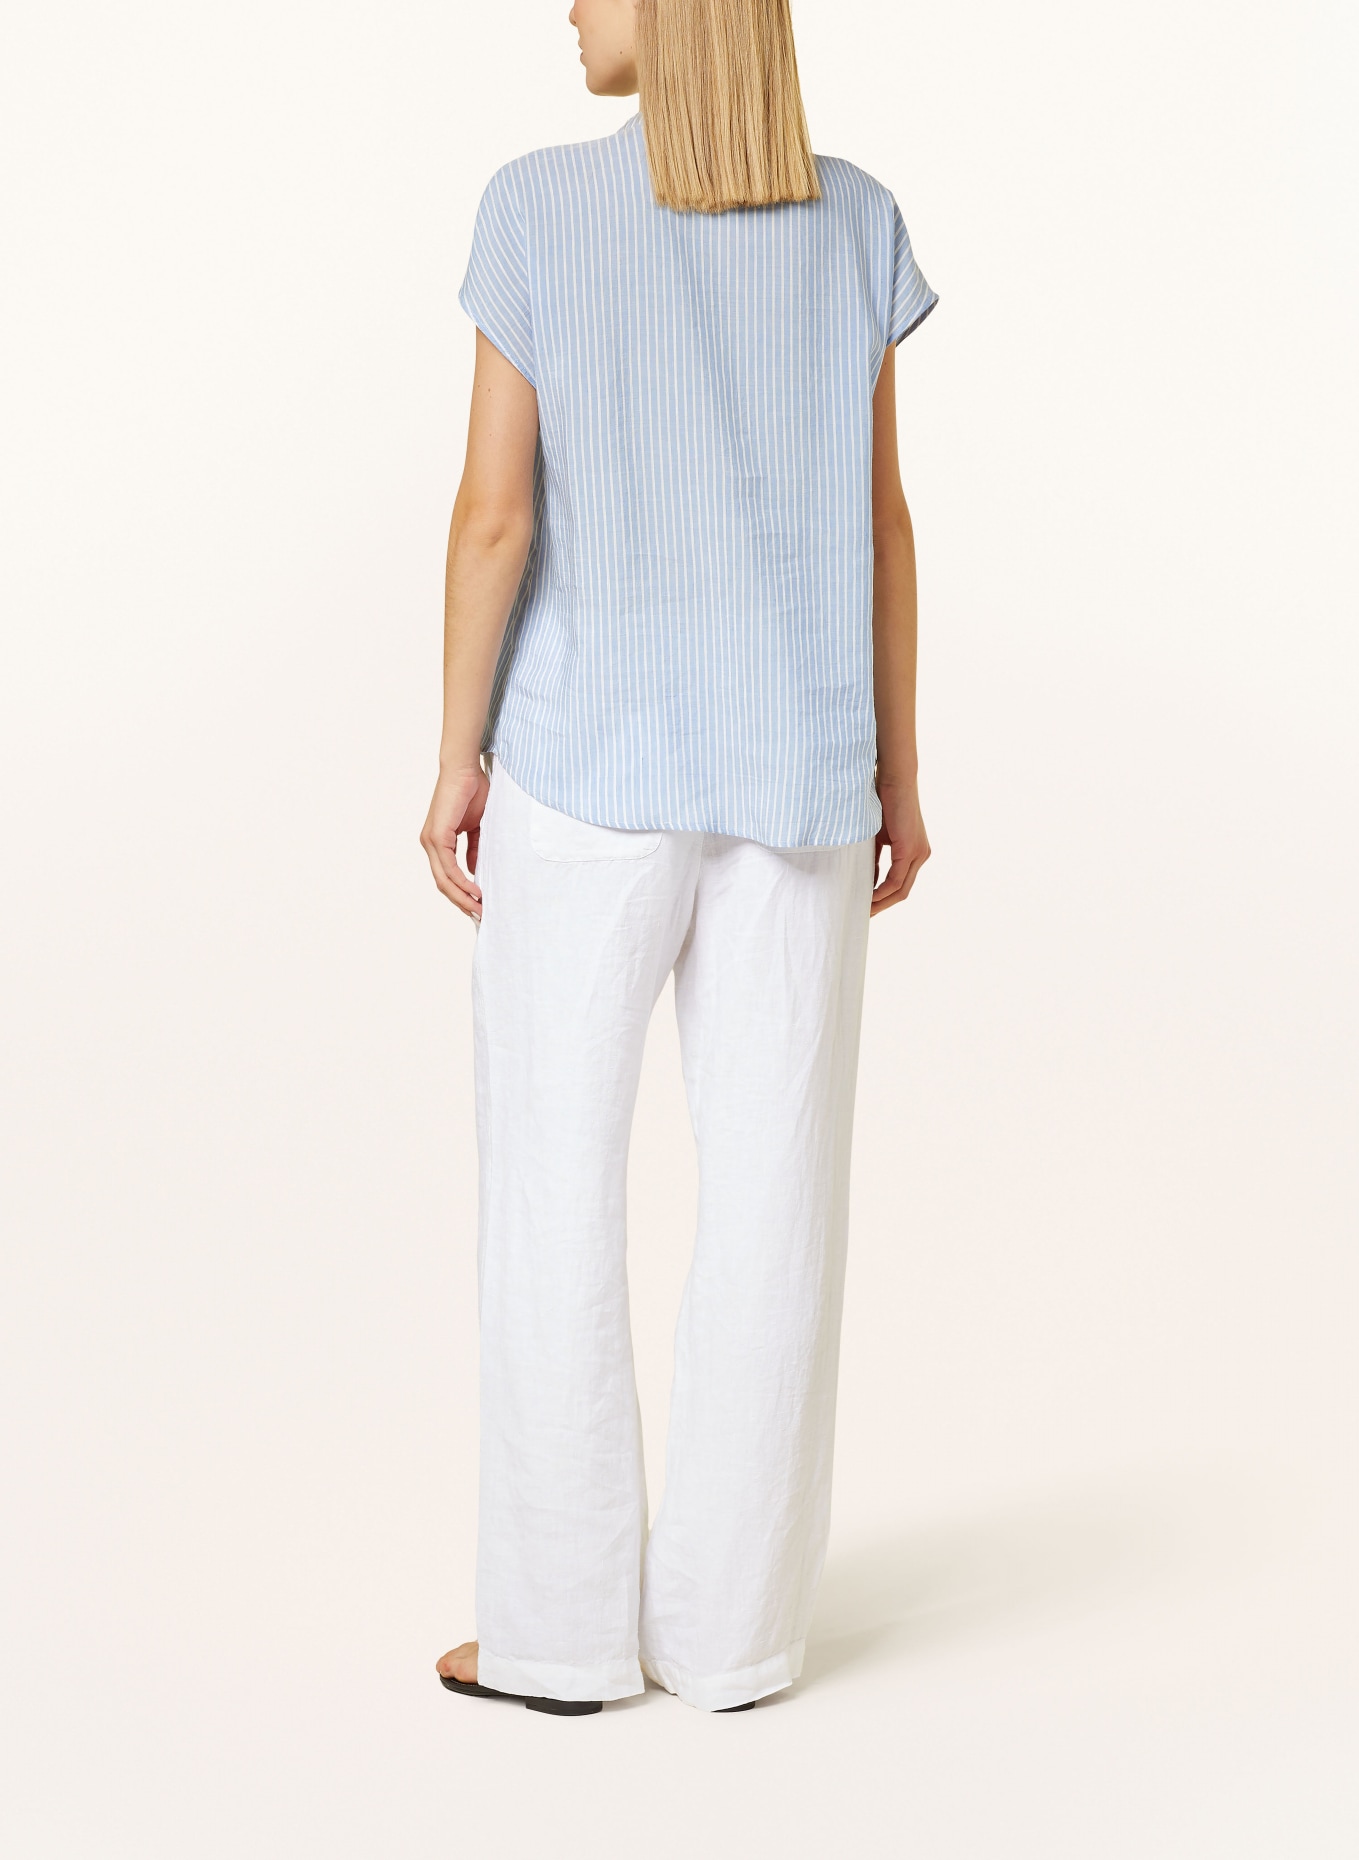 ELENA MIRO Blouse top DANAE with linen, Color: LIGHT BLUE/ WHITE (Image 3)